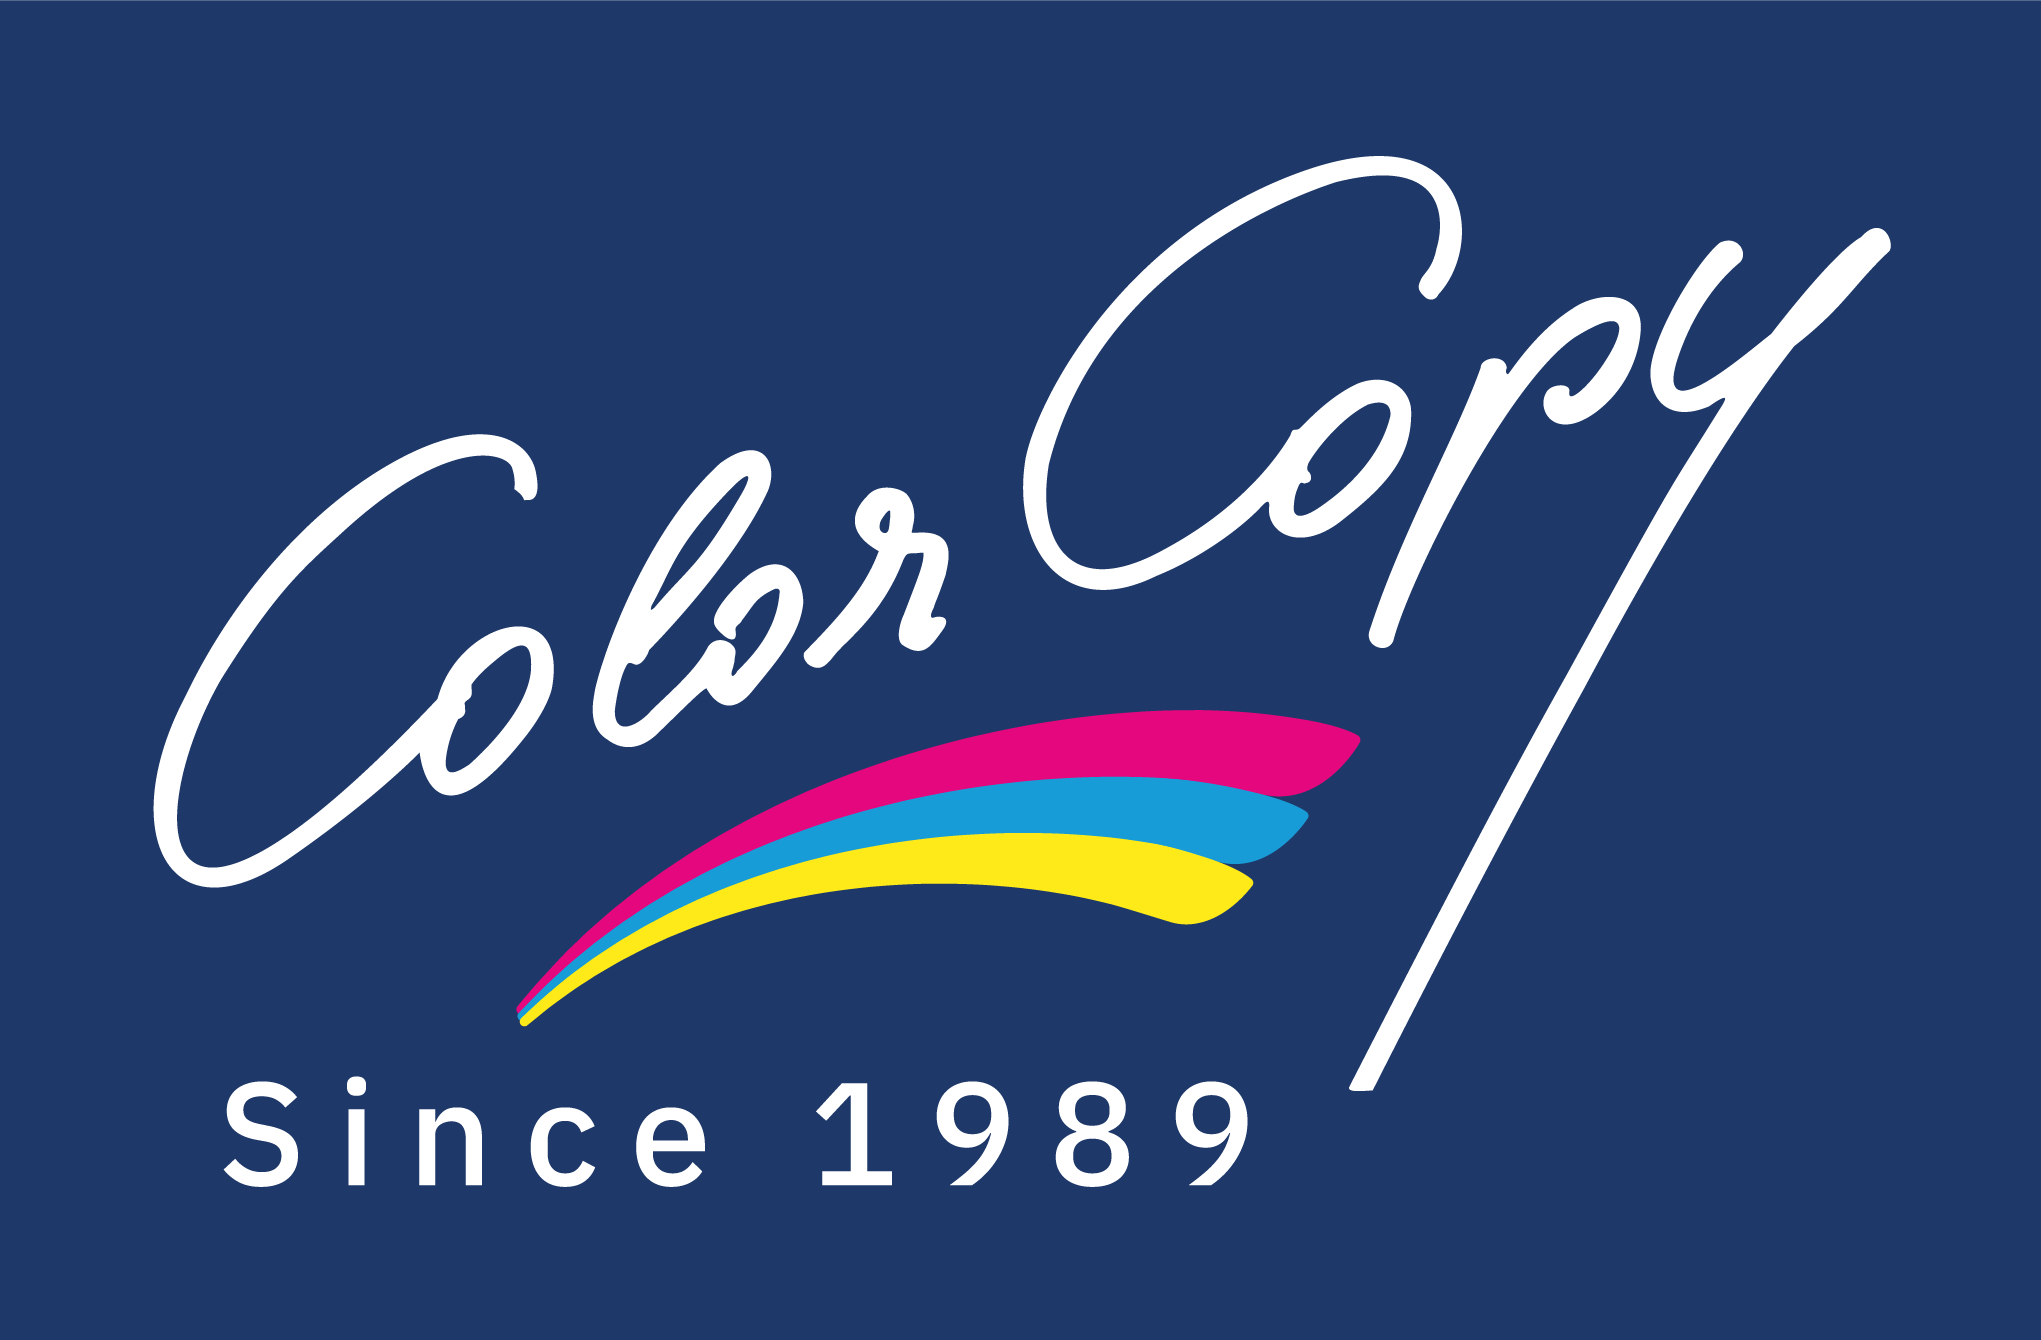 Color Copy